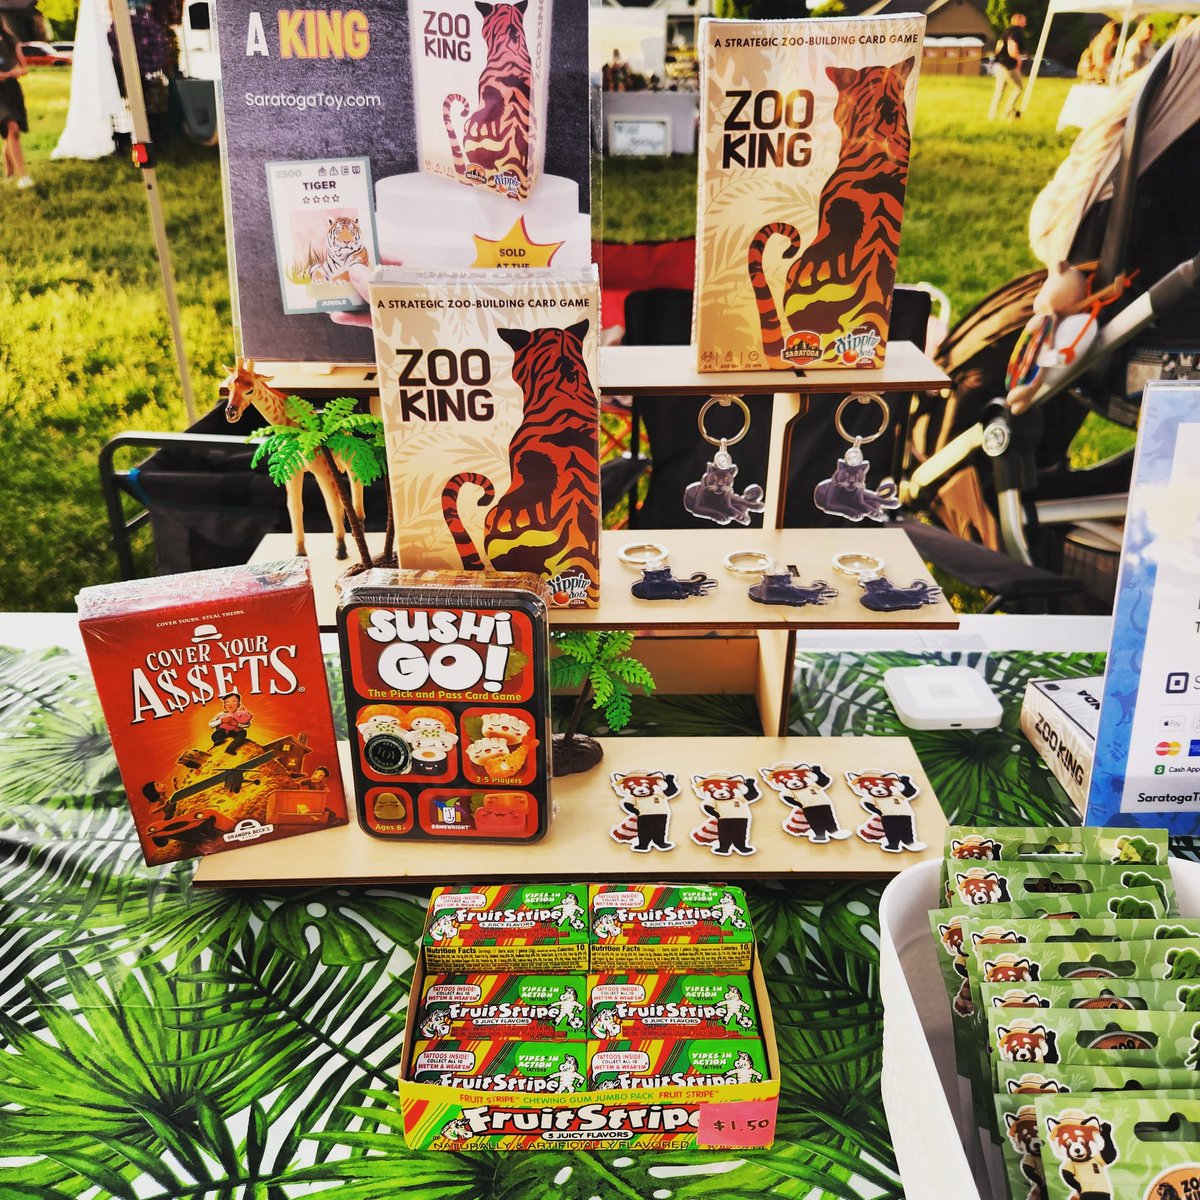 Summer market setup 👌 #boardgames #zooking #tabletopgames #zootycoon #planetzoo #gamer #zoo